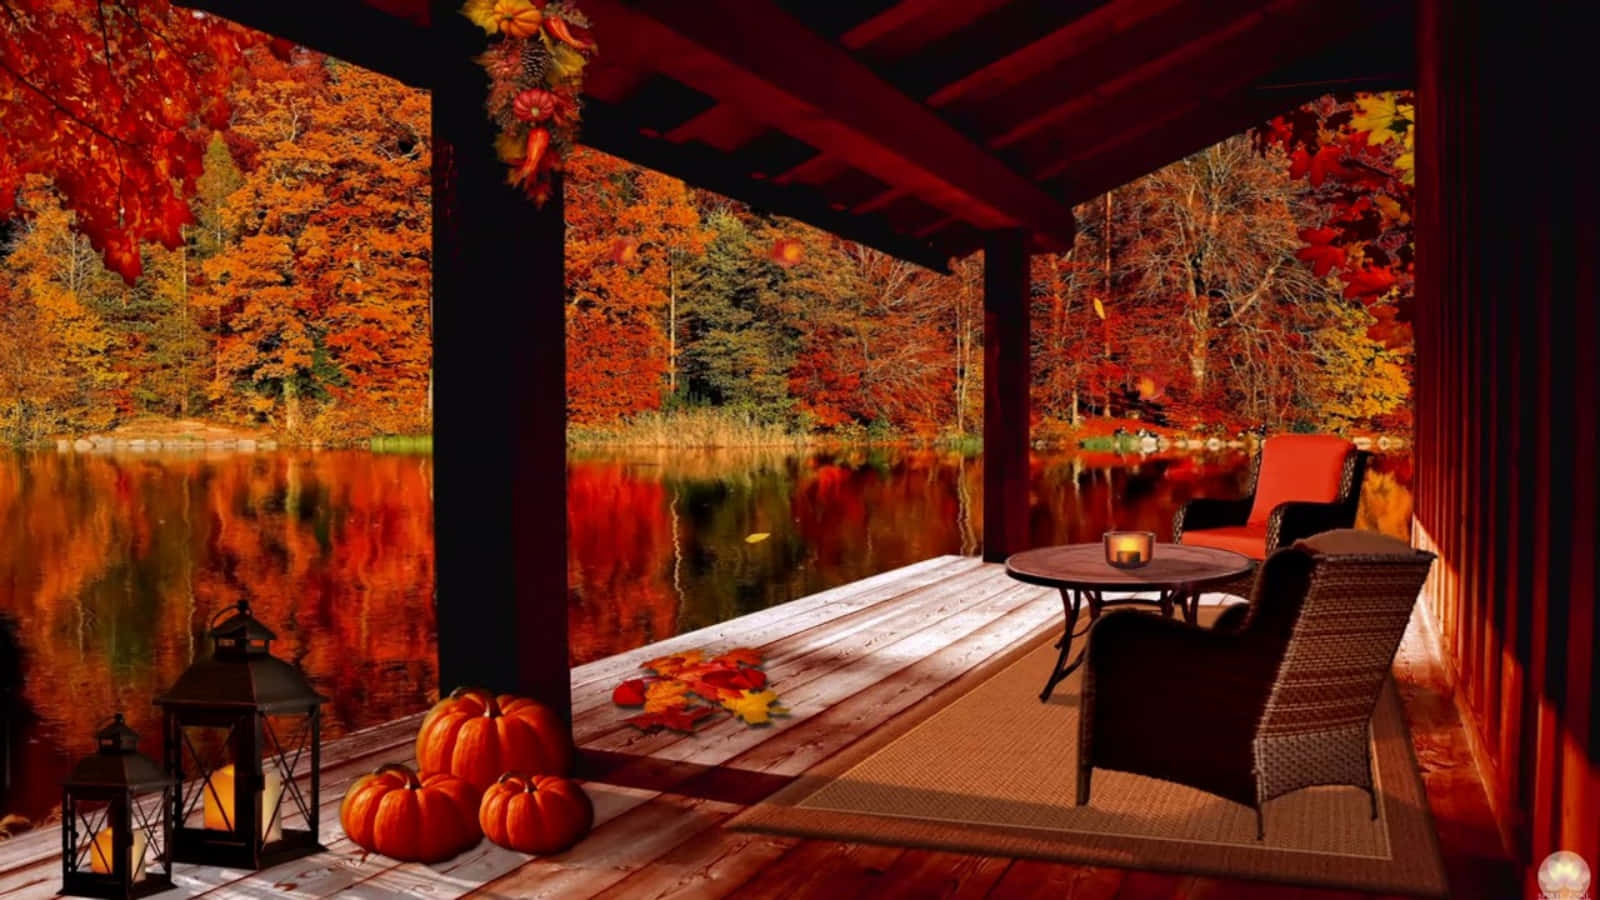 “Enjoy the Peaceful View of Cozy Fall Desktop” Wallpaper